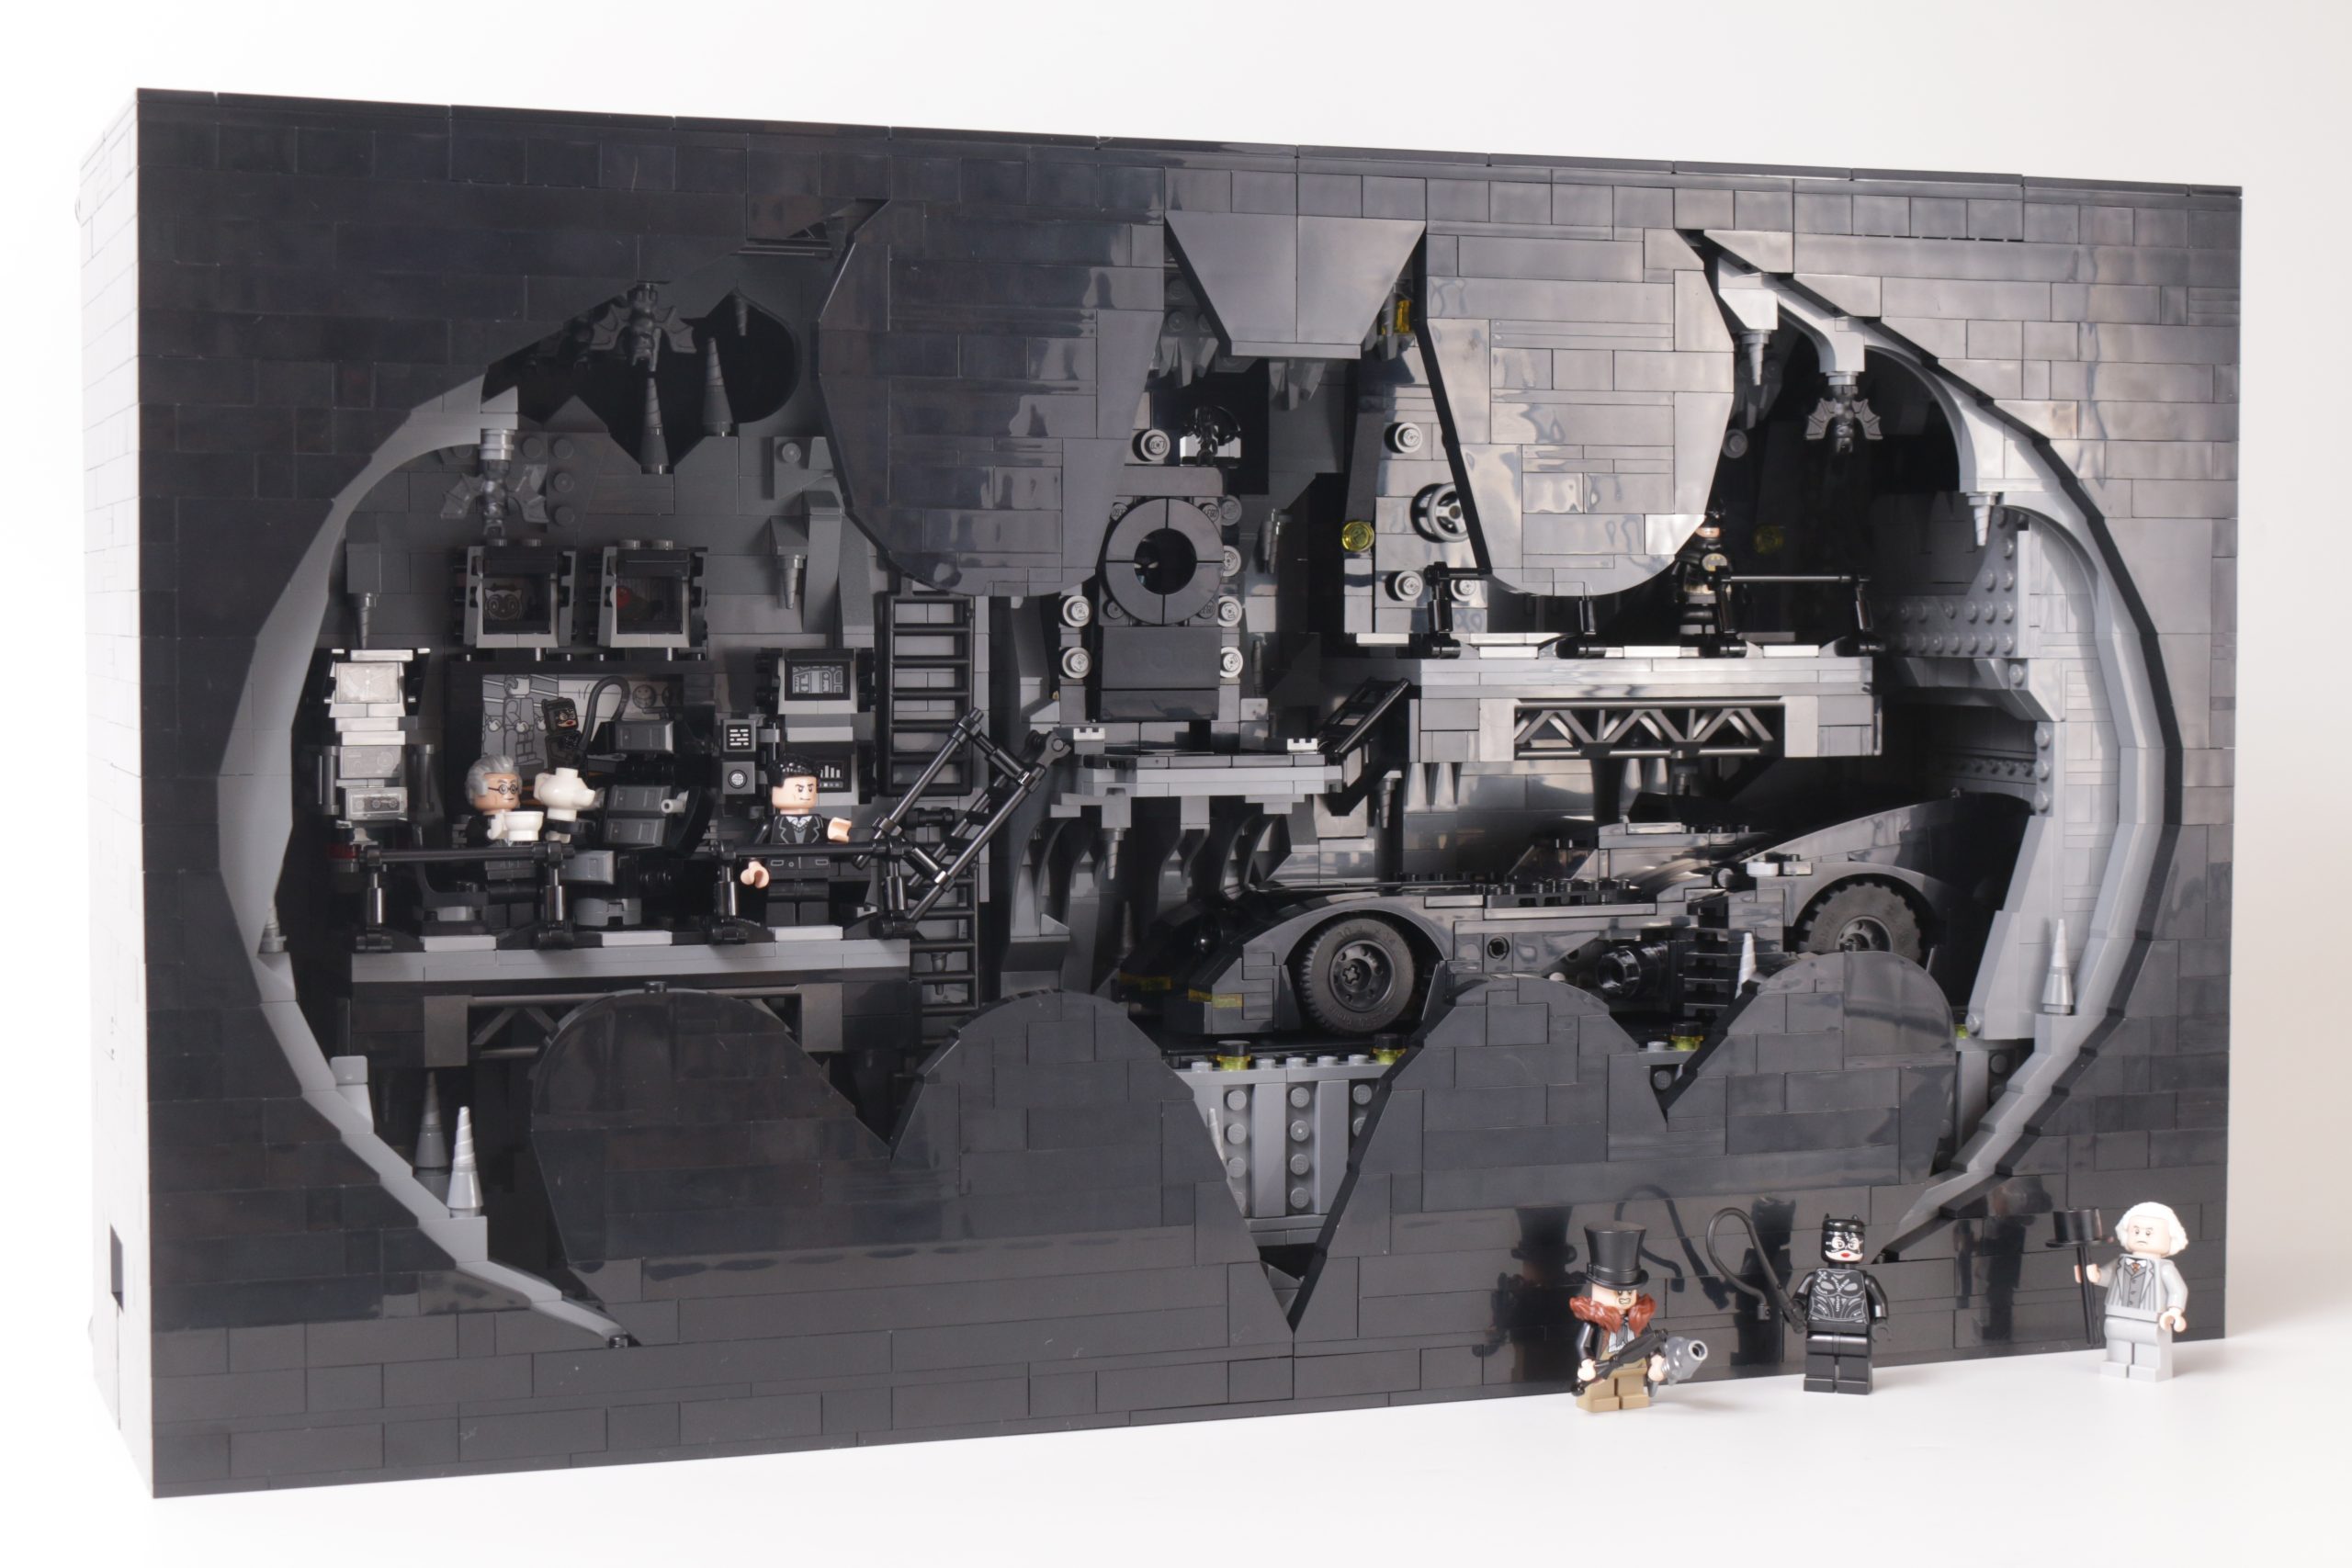 LEGO's BATMAN RETURNS Batcave Shadow Box Set Delivers on the